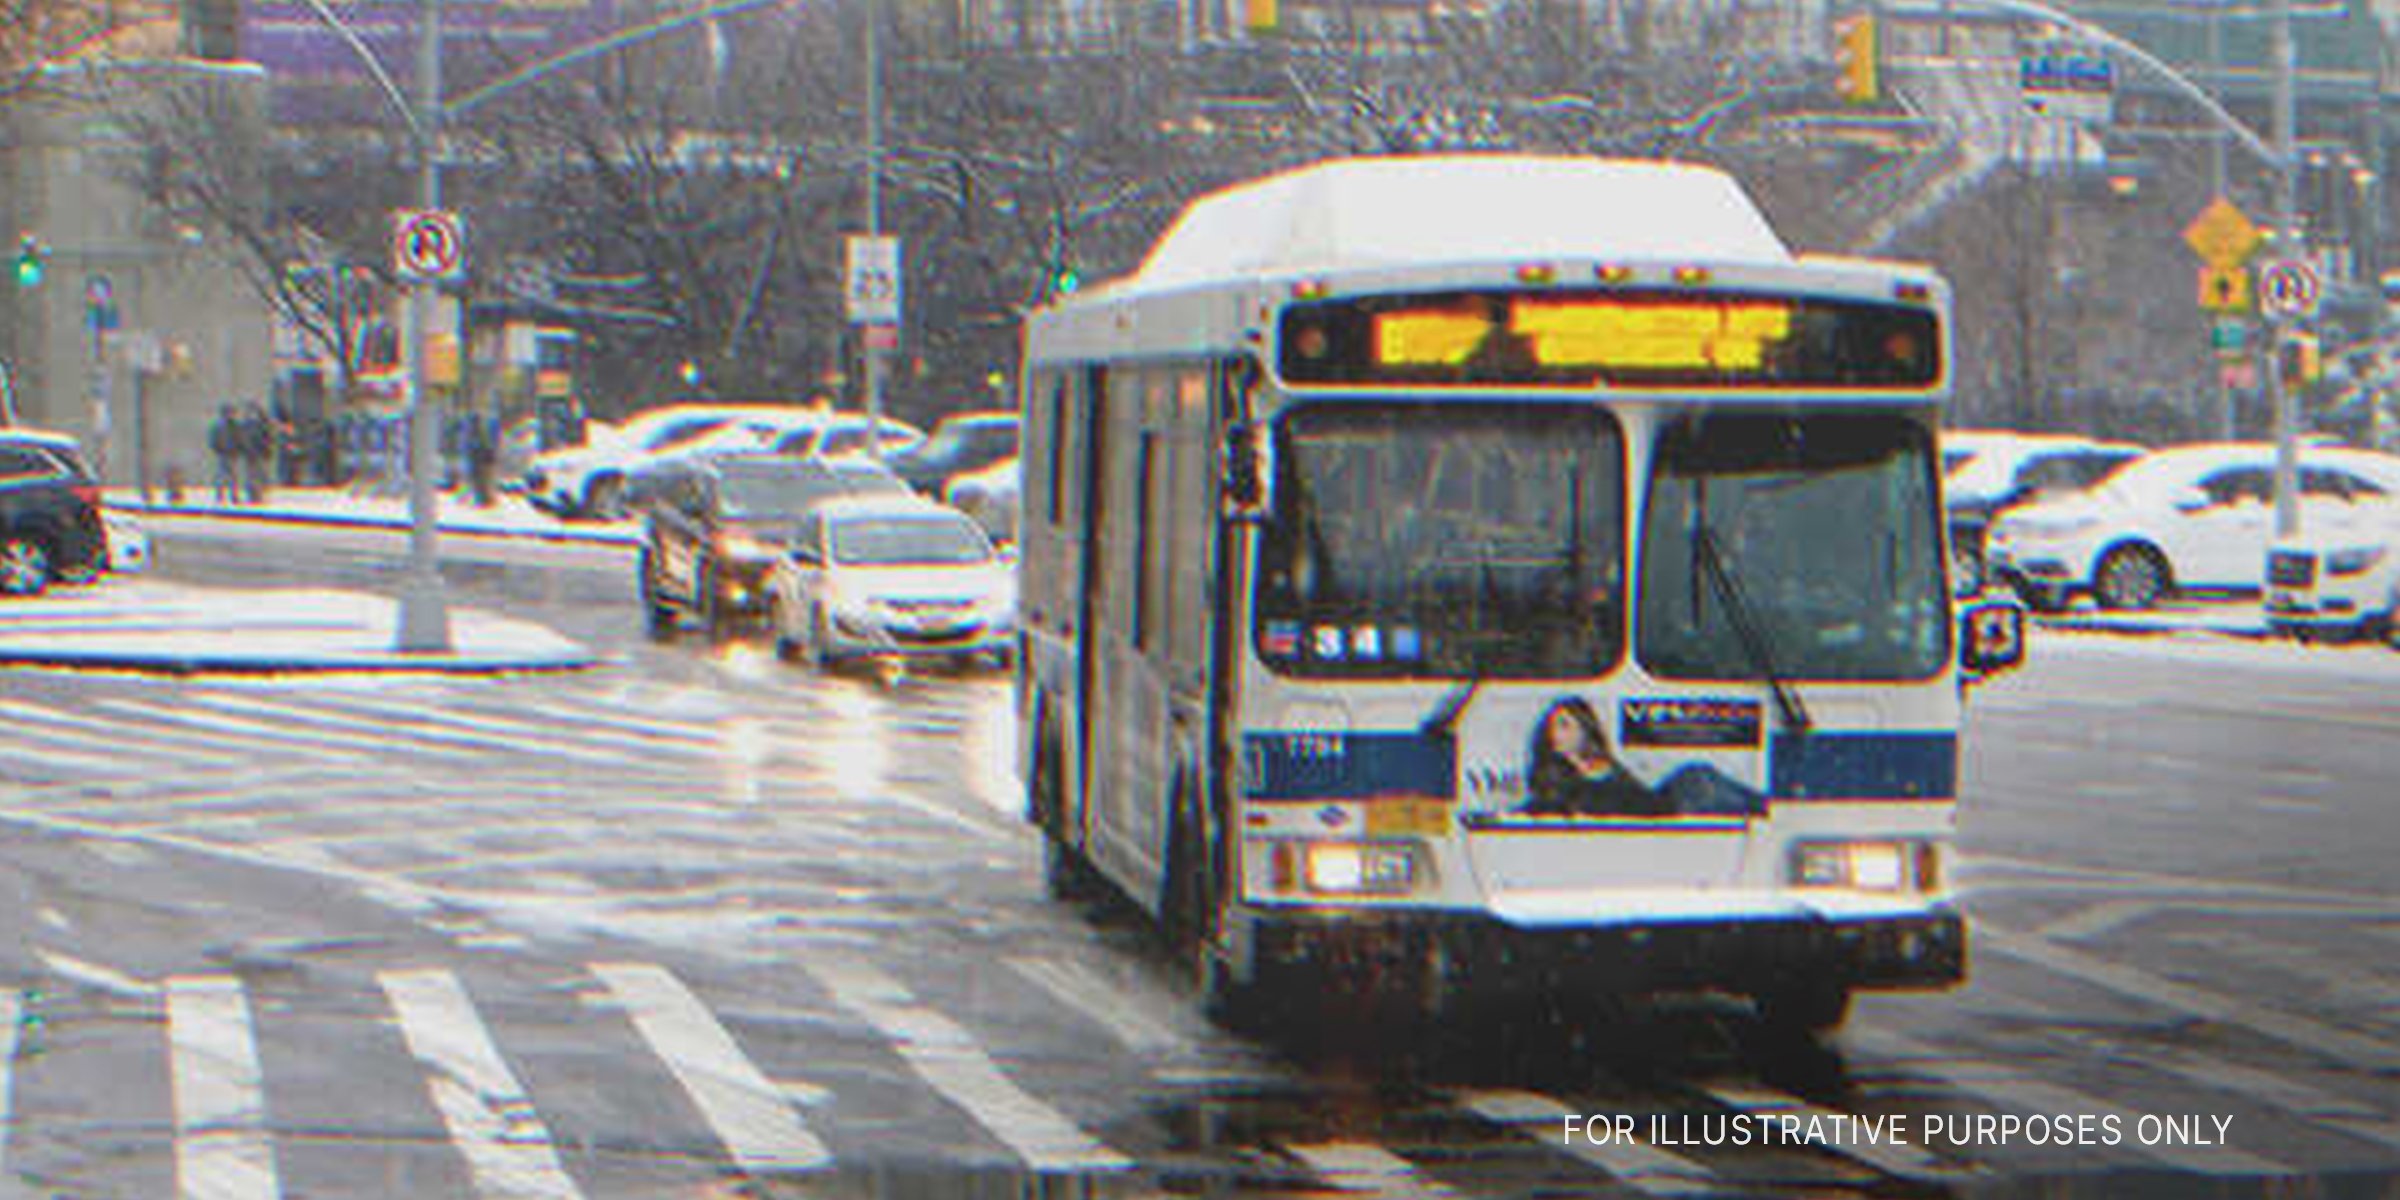 A bus drives across a crosswalk while it's raining | Source: Shutterstock